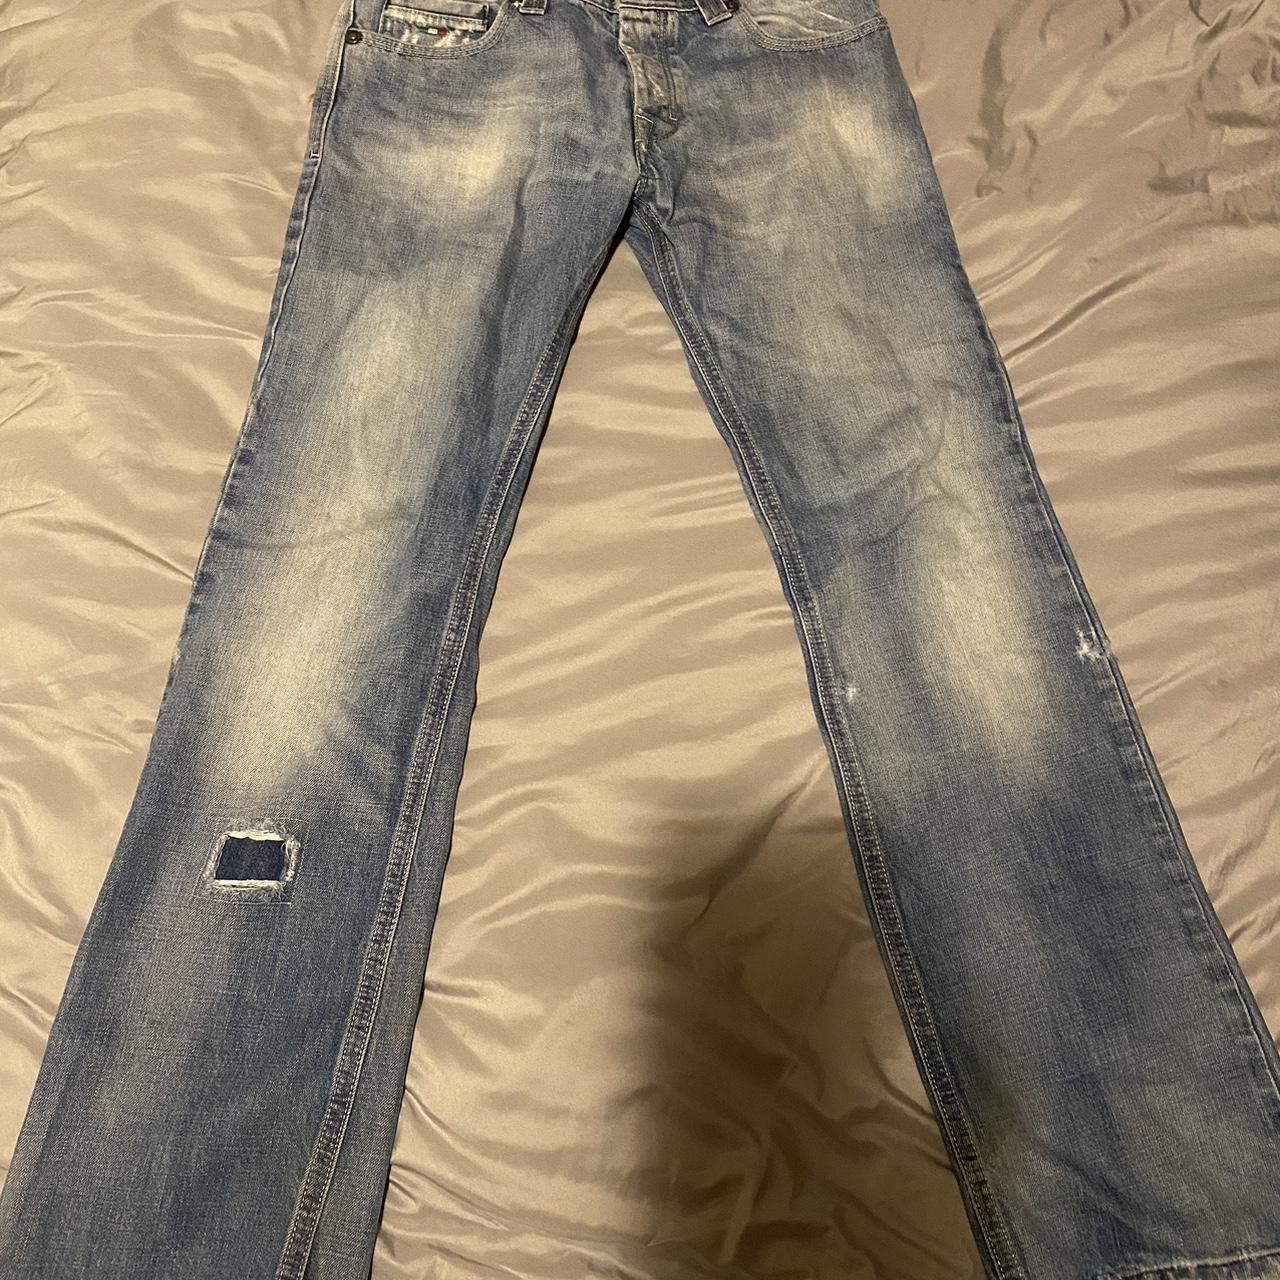 Distressed jeans - Depop